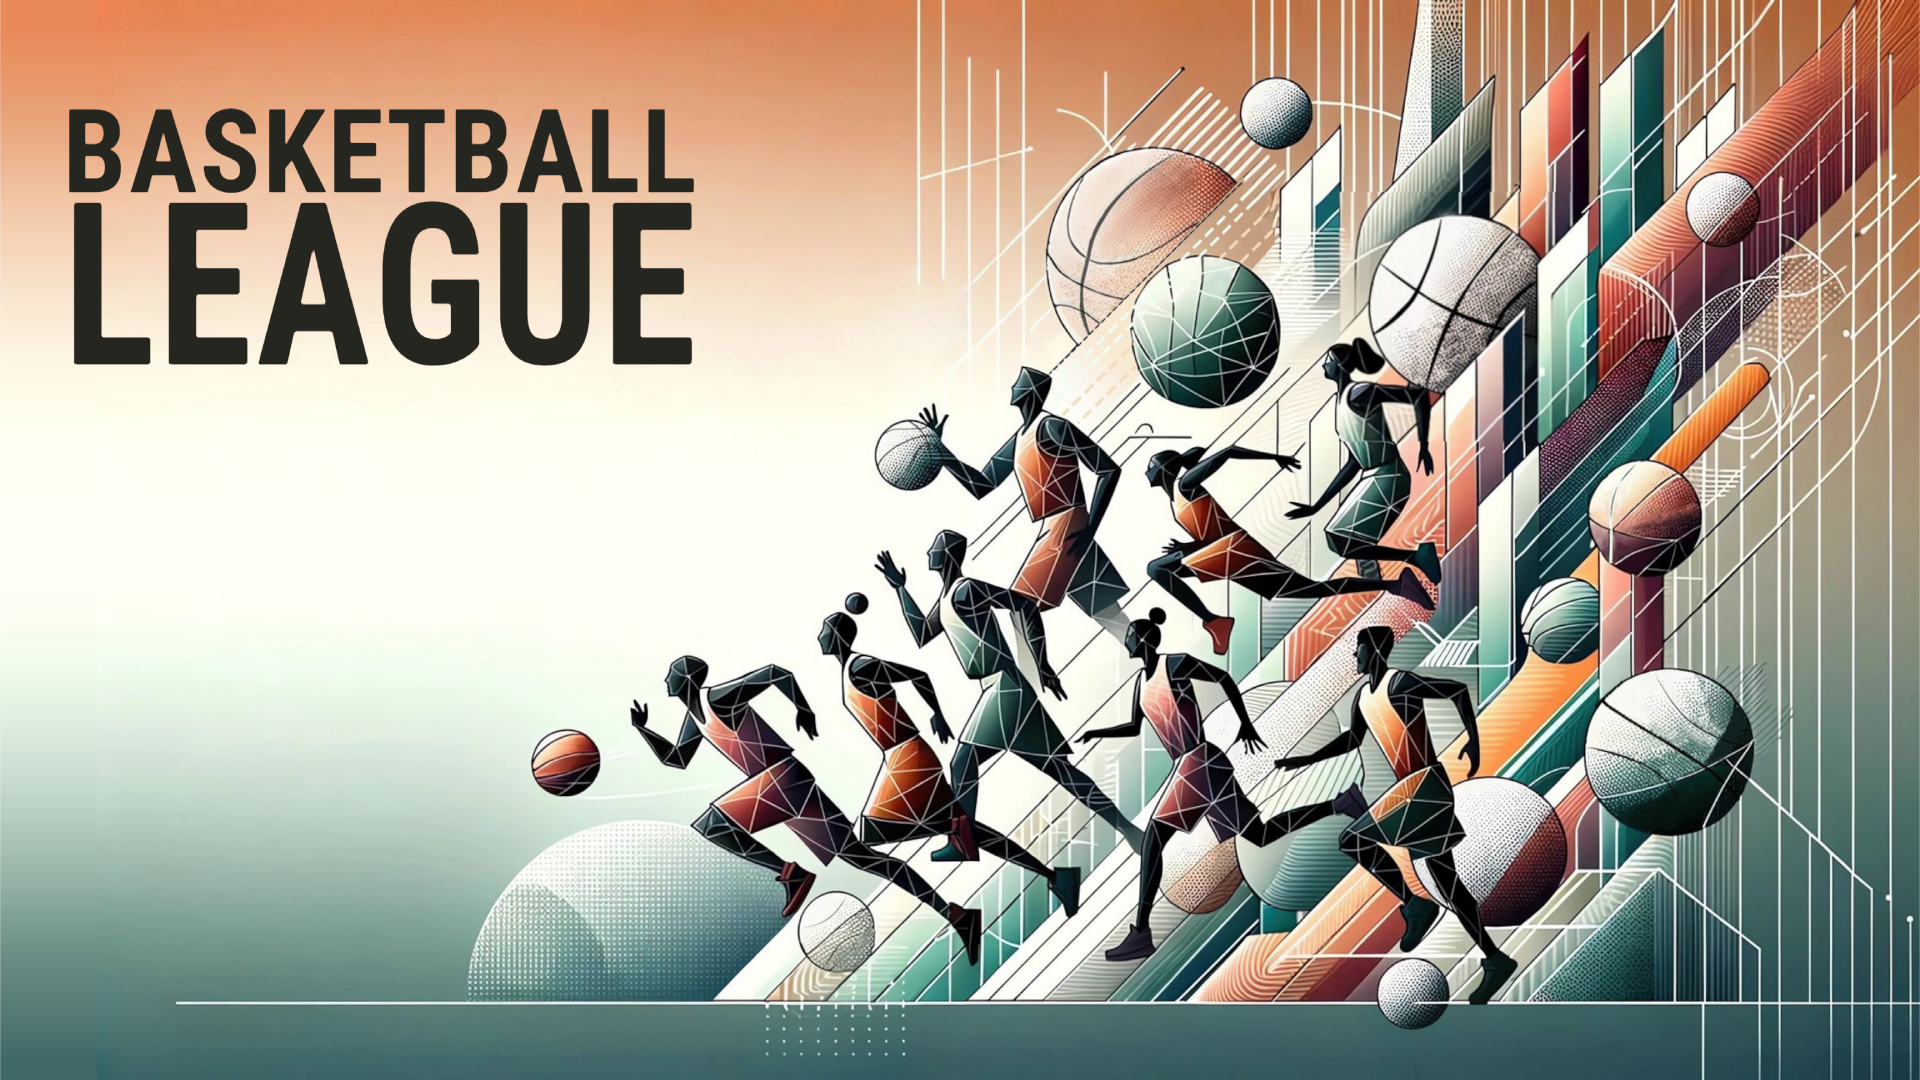 Basketball League Game Image